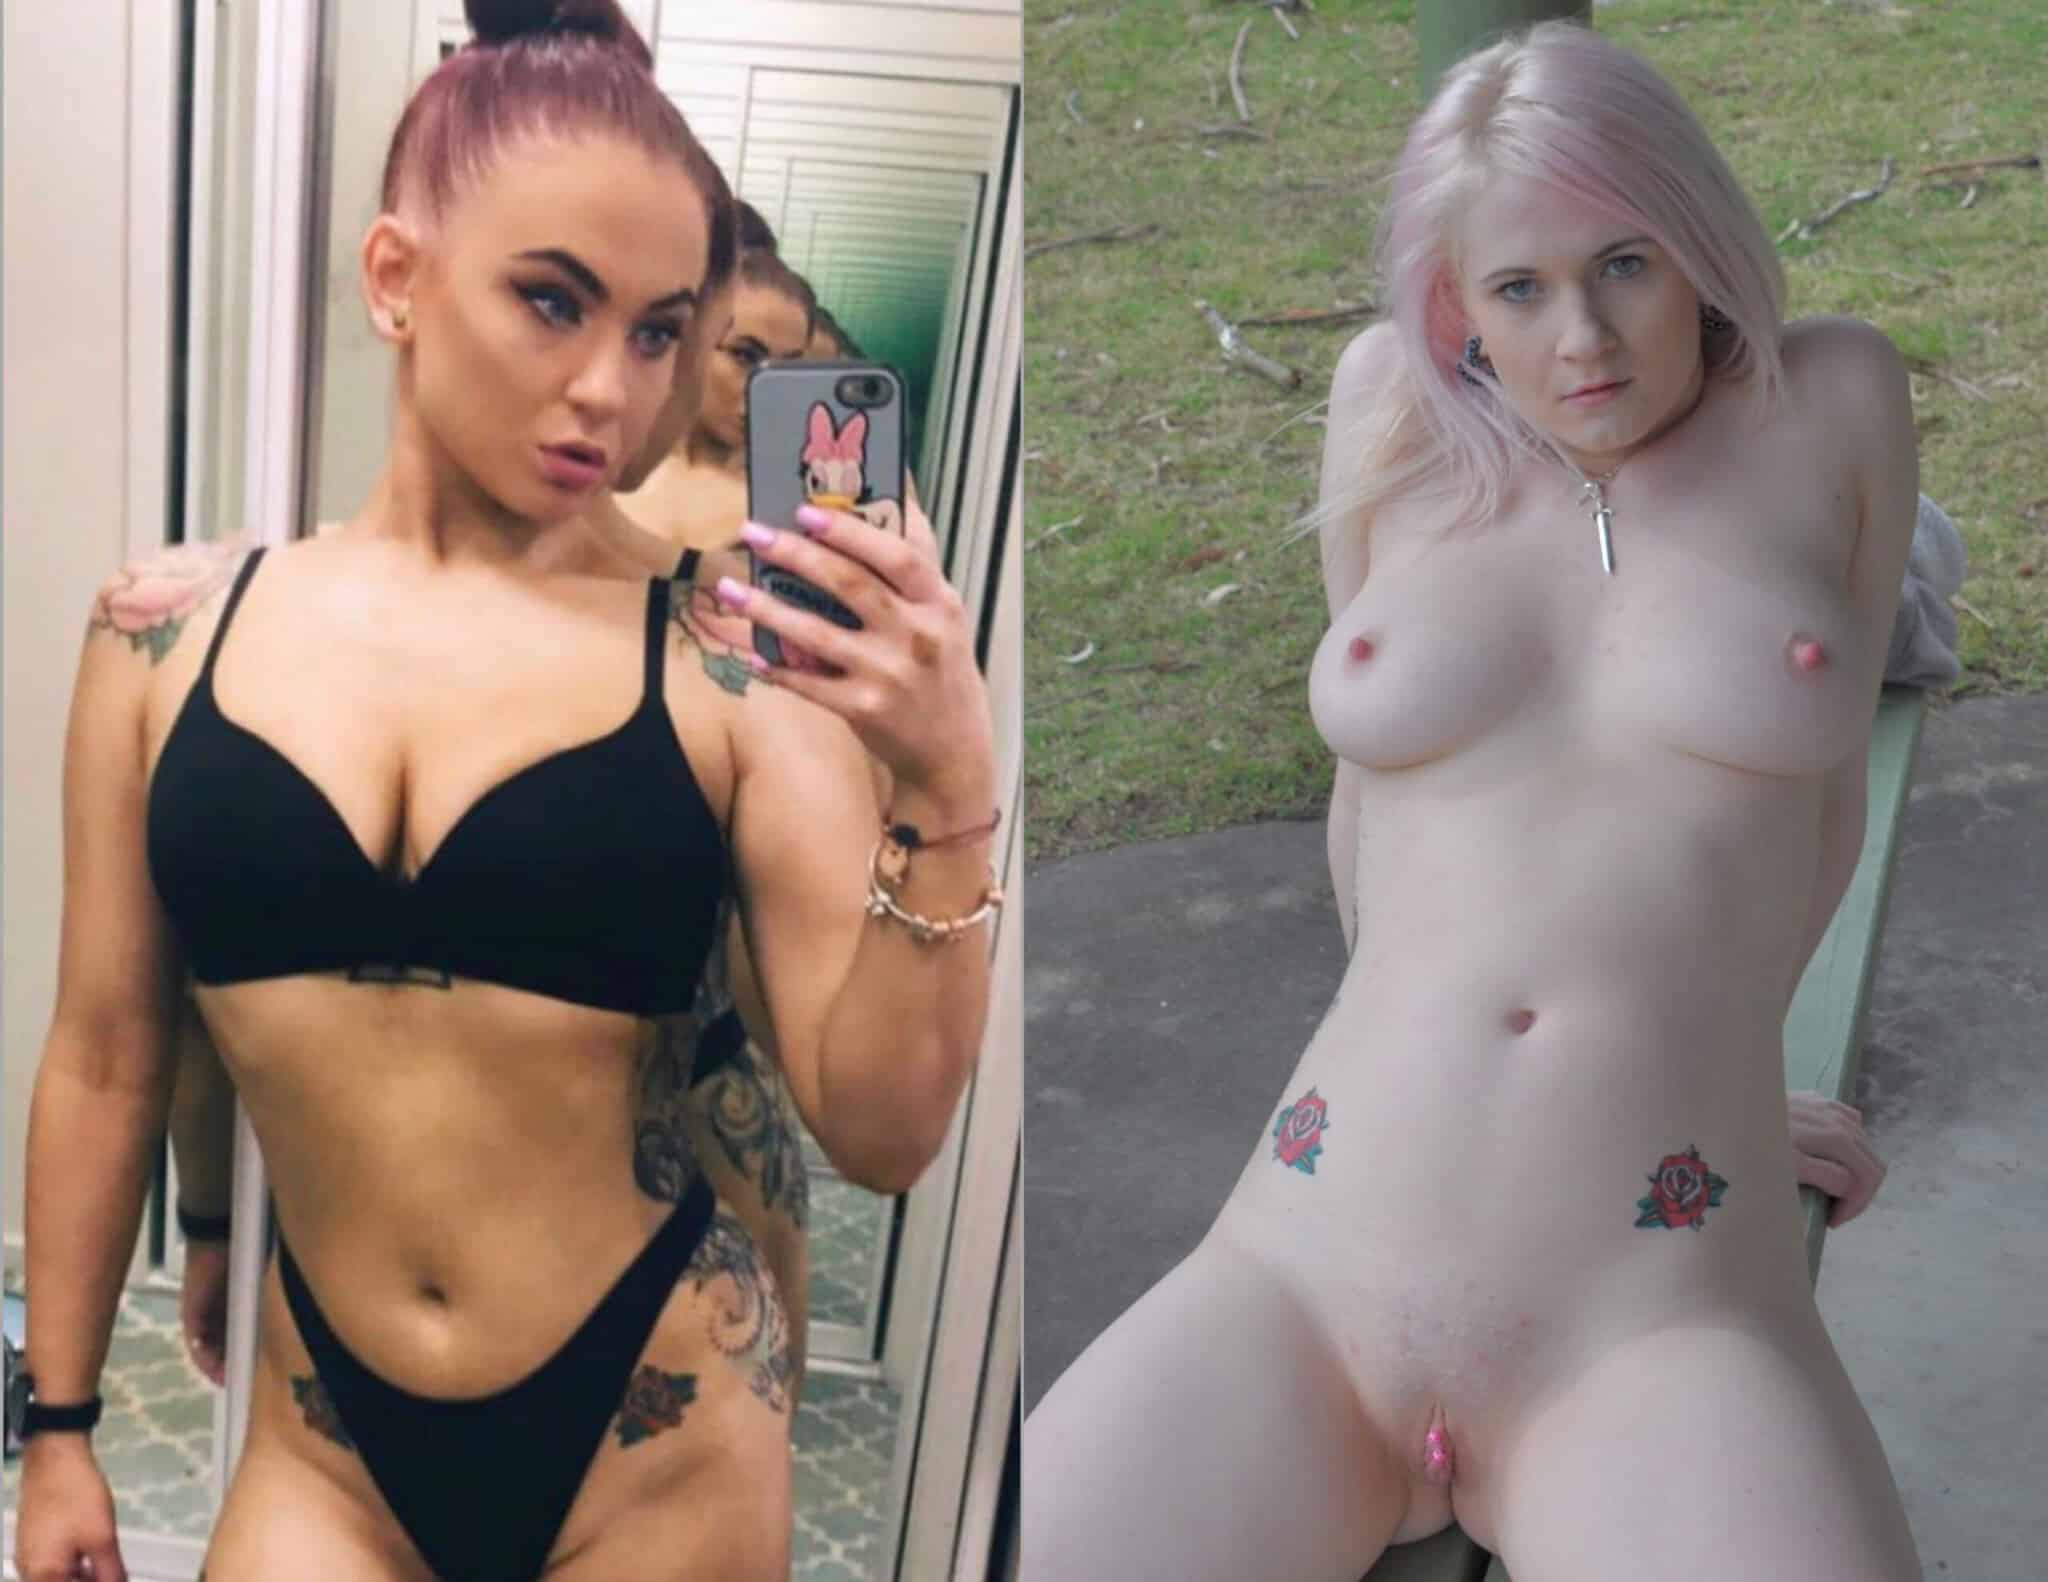 Real Amateurs Pussy Flash Pics Public Nudity Pics Boobs Flash Pics - Dressed undressed